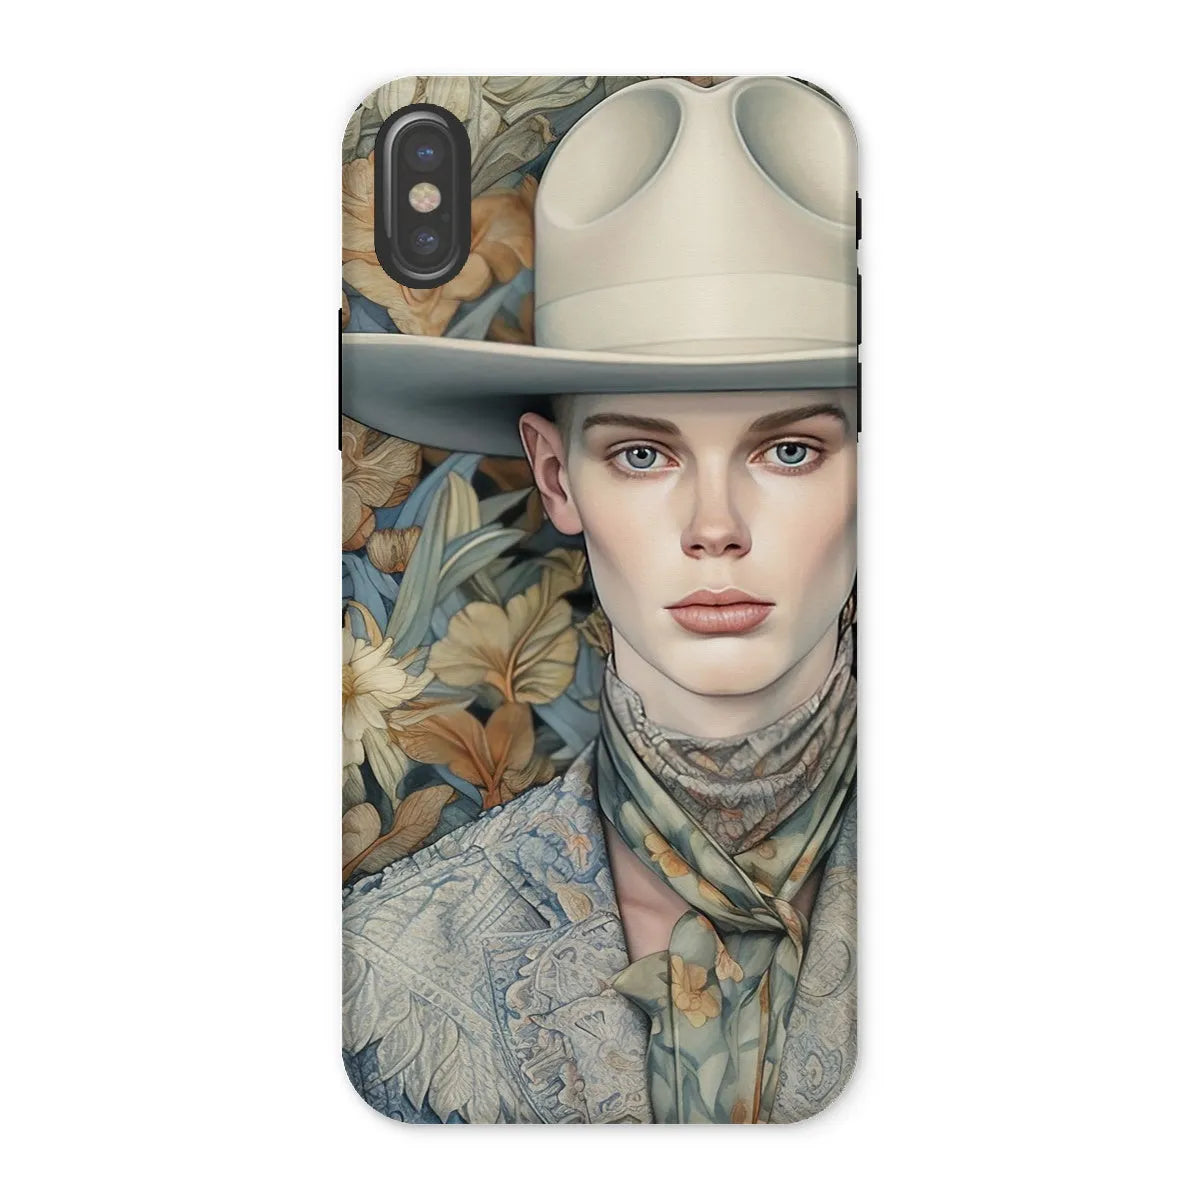 Jasper The Gay Cowboy - Dandy Gay Aesthetic Art Phone Case - Iphone x / Matte - Mobile Phone Cases - Aesthetic Art